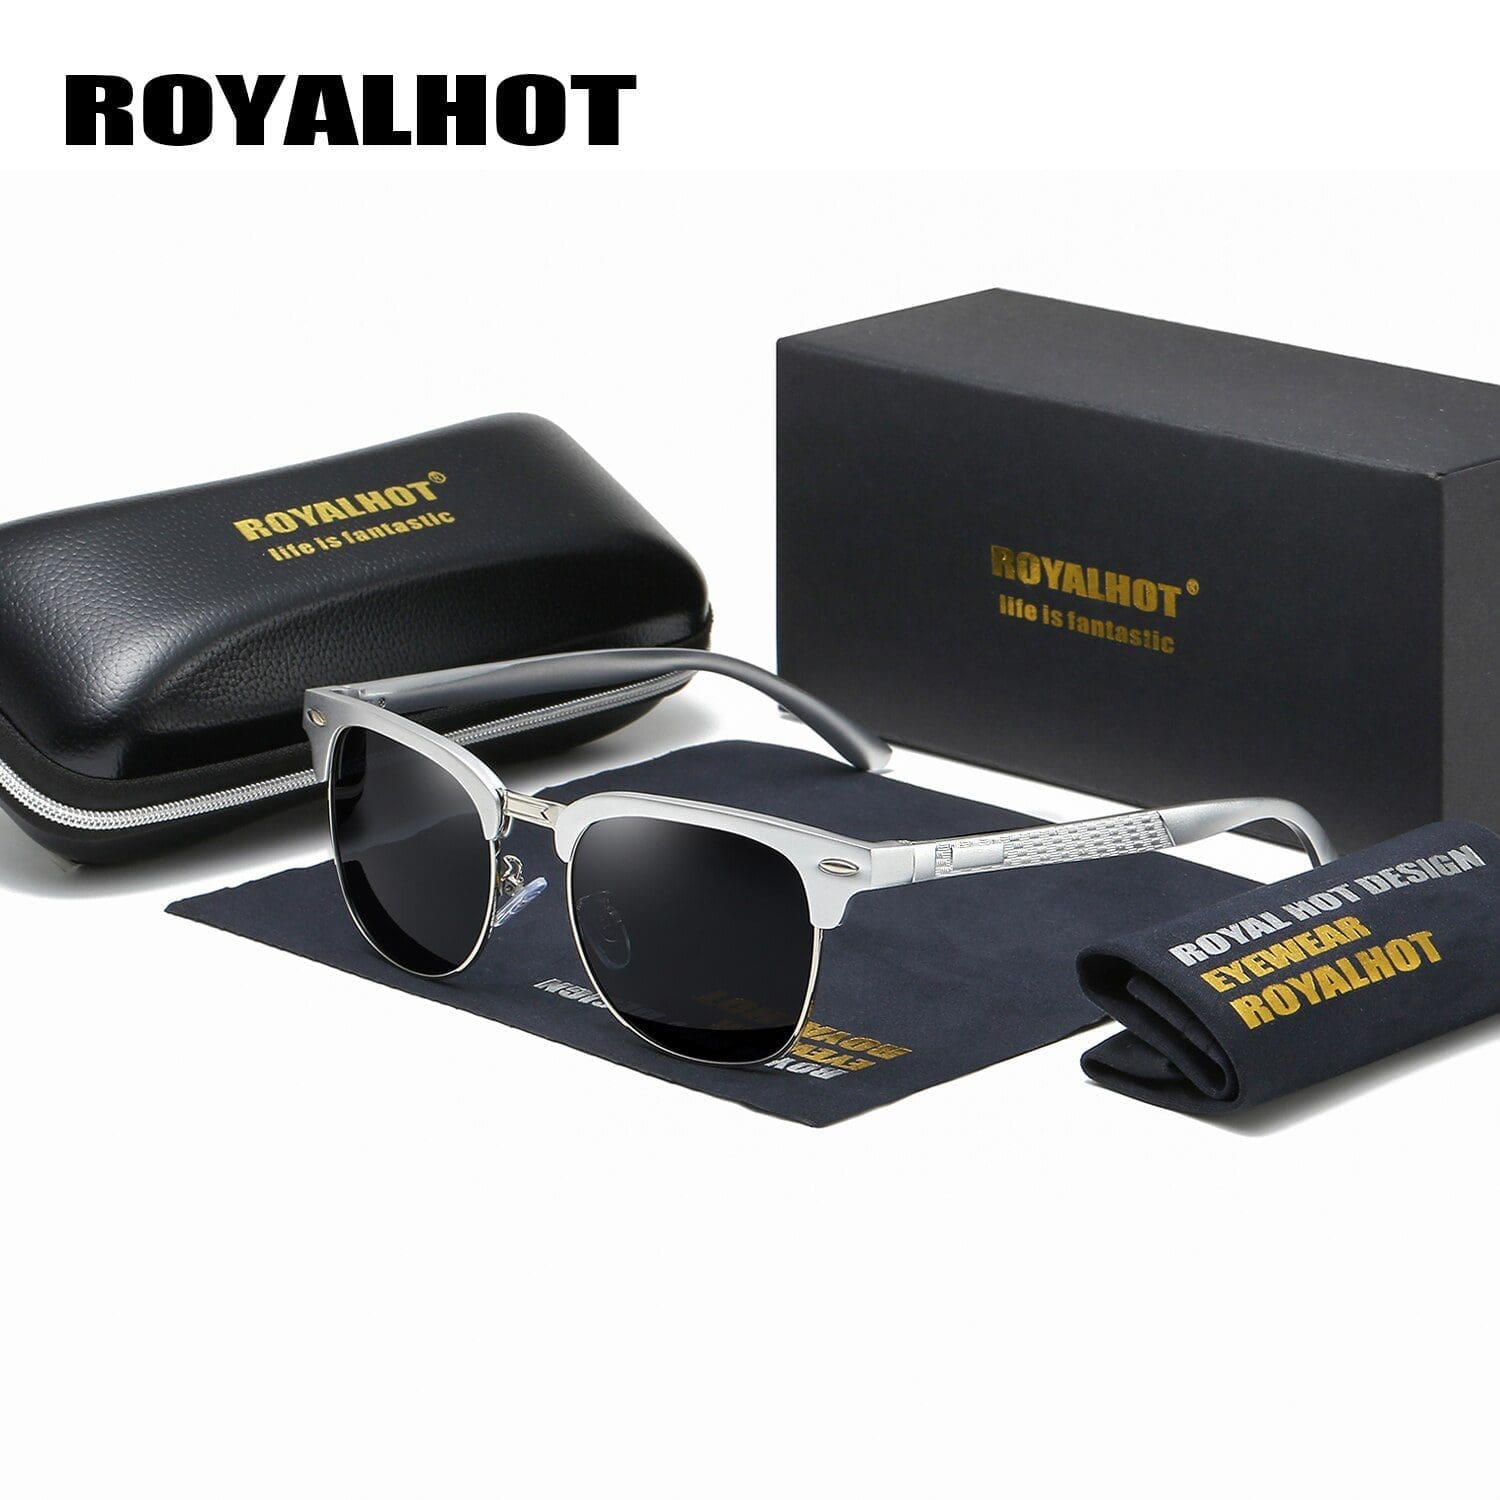 Royal Hot Polarized Aluminum Magnesium Half Frame Sunglasses 6